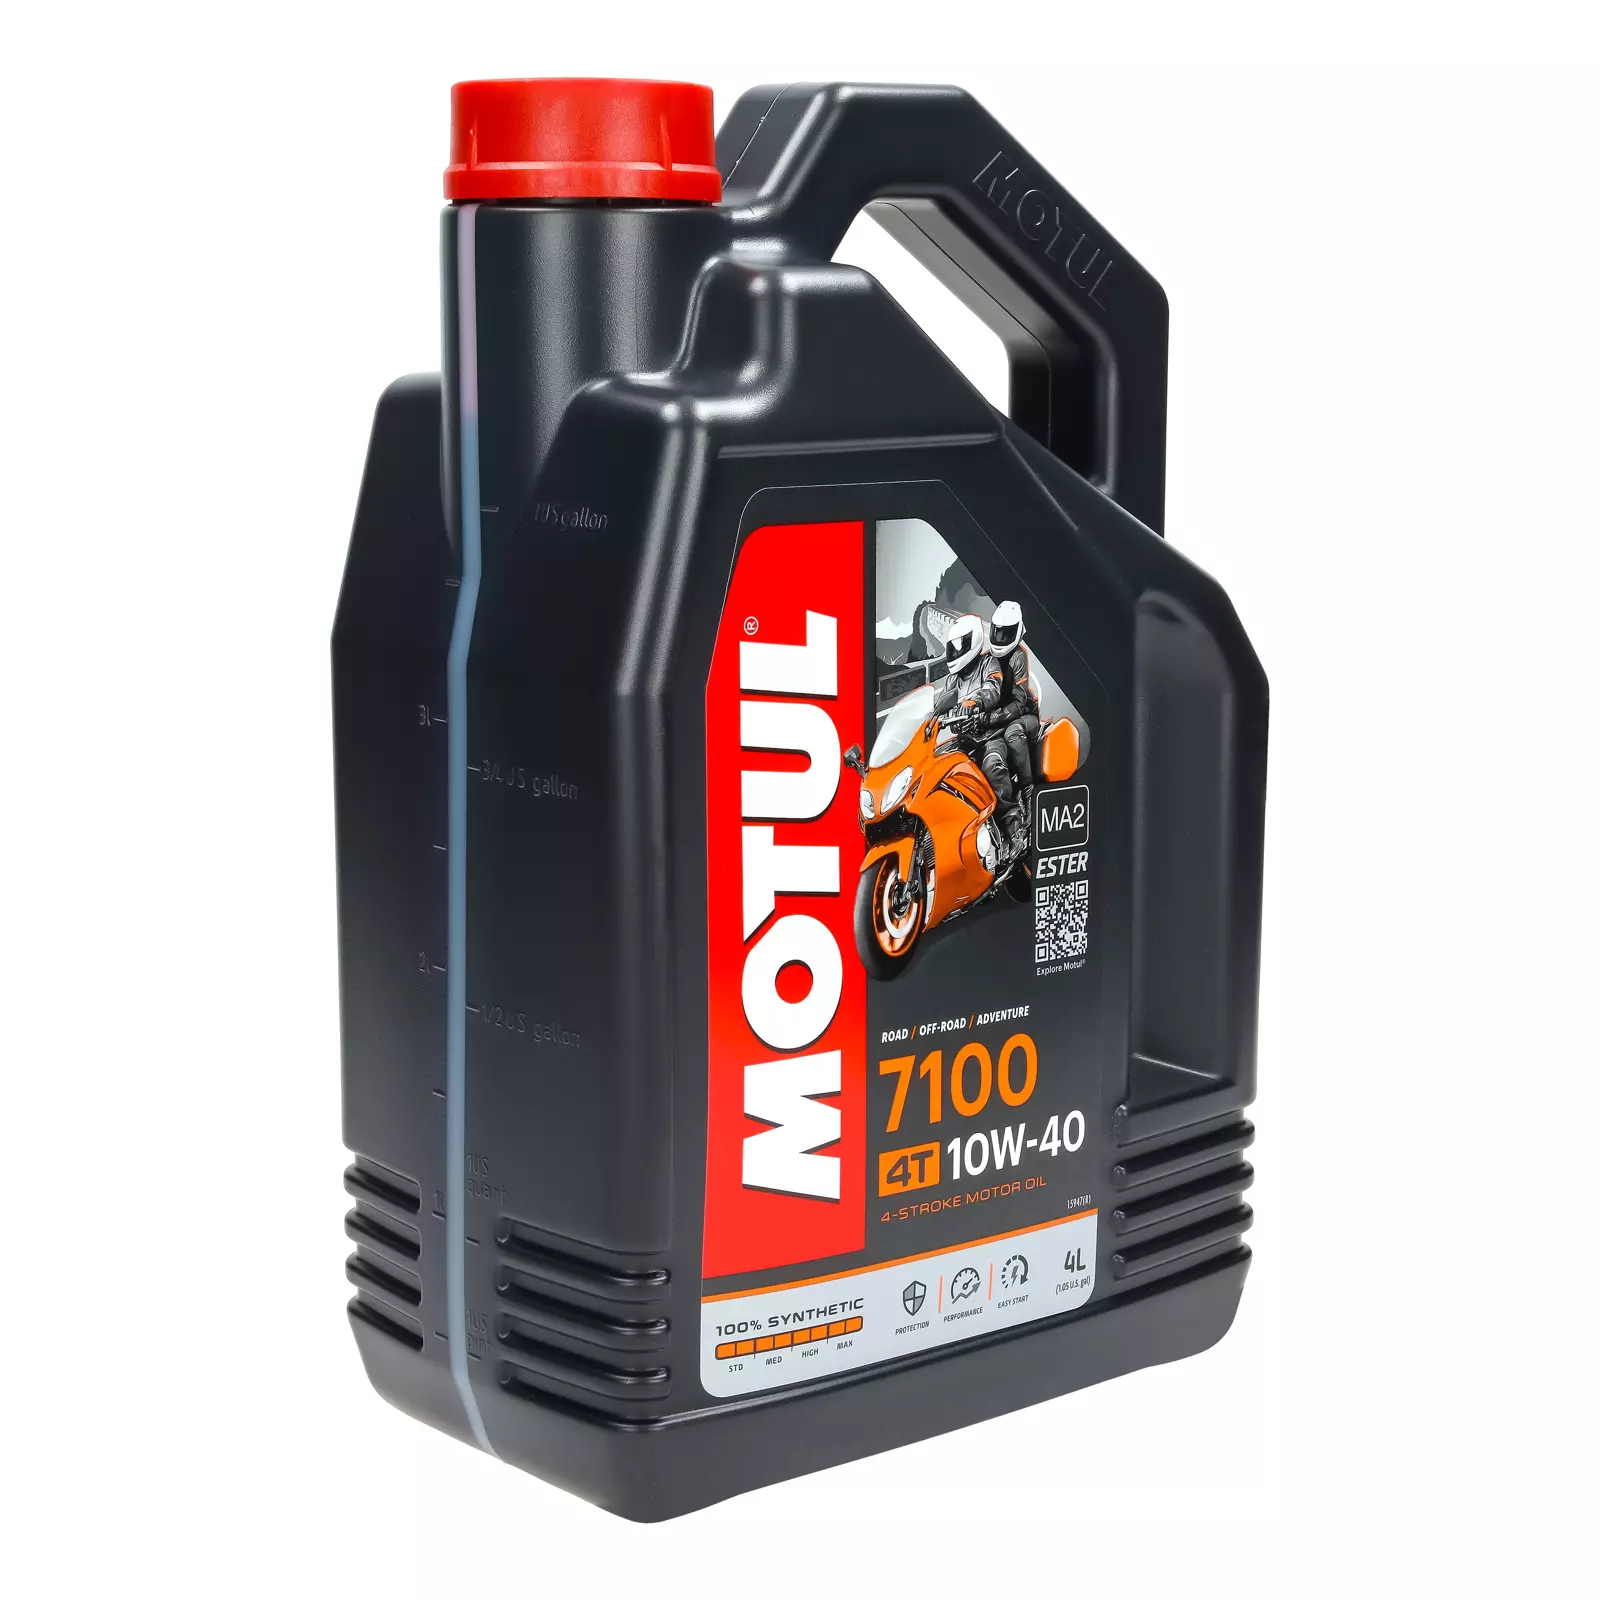 Моторное масло Motul 7100 4T 10W-40 4л., 104091